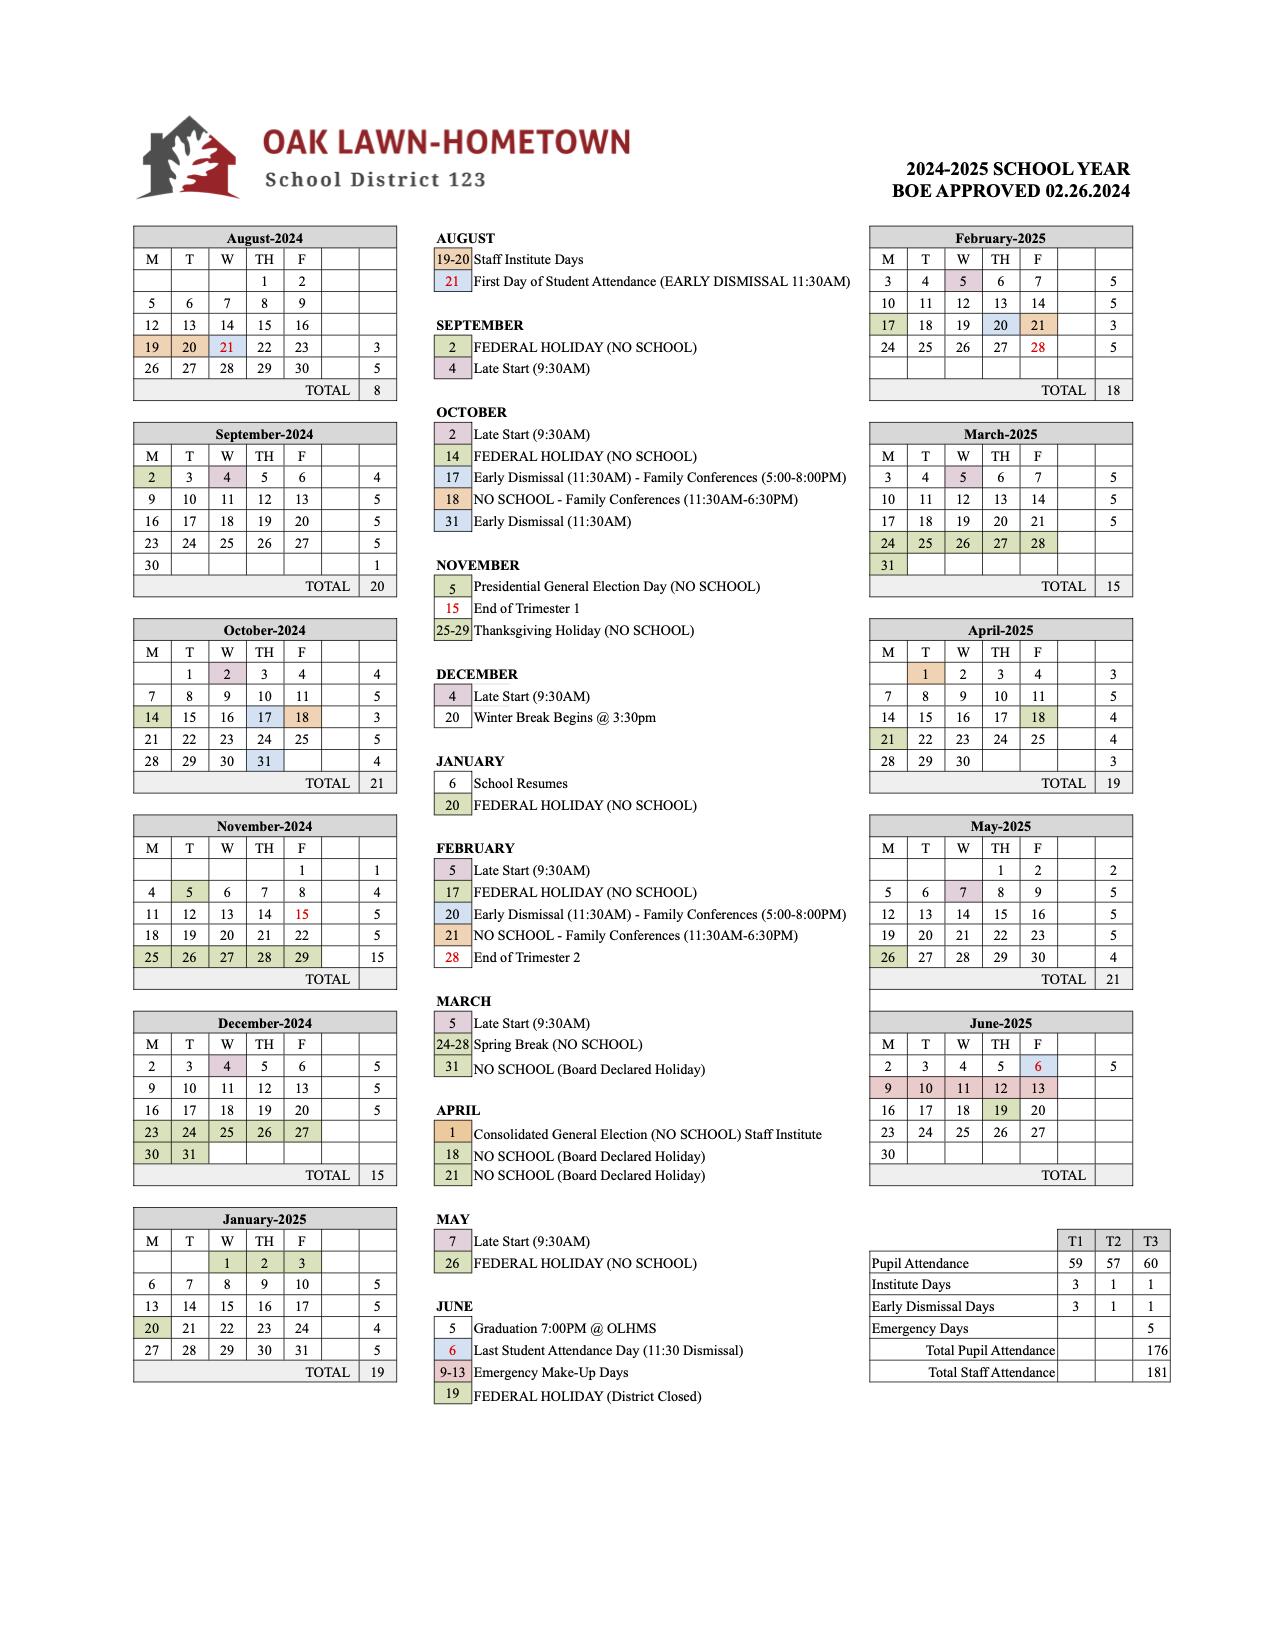 2024-25 Approved Calendar